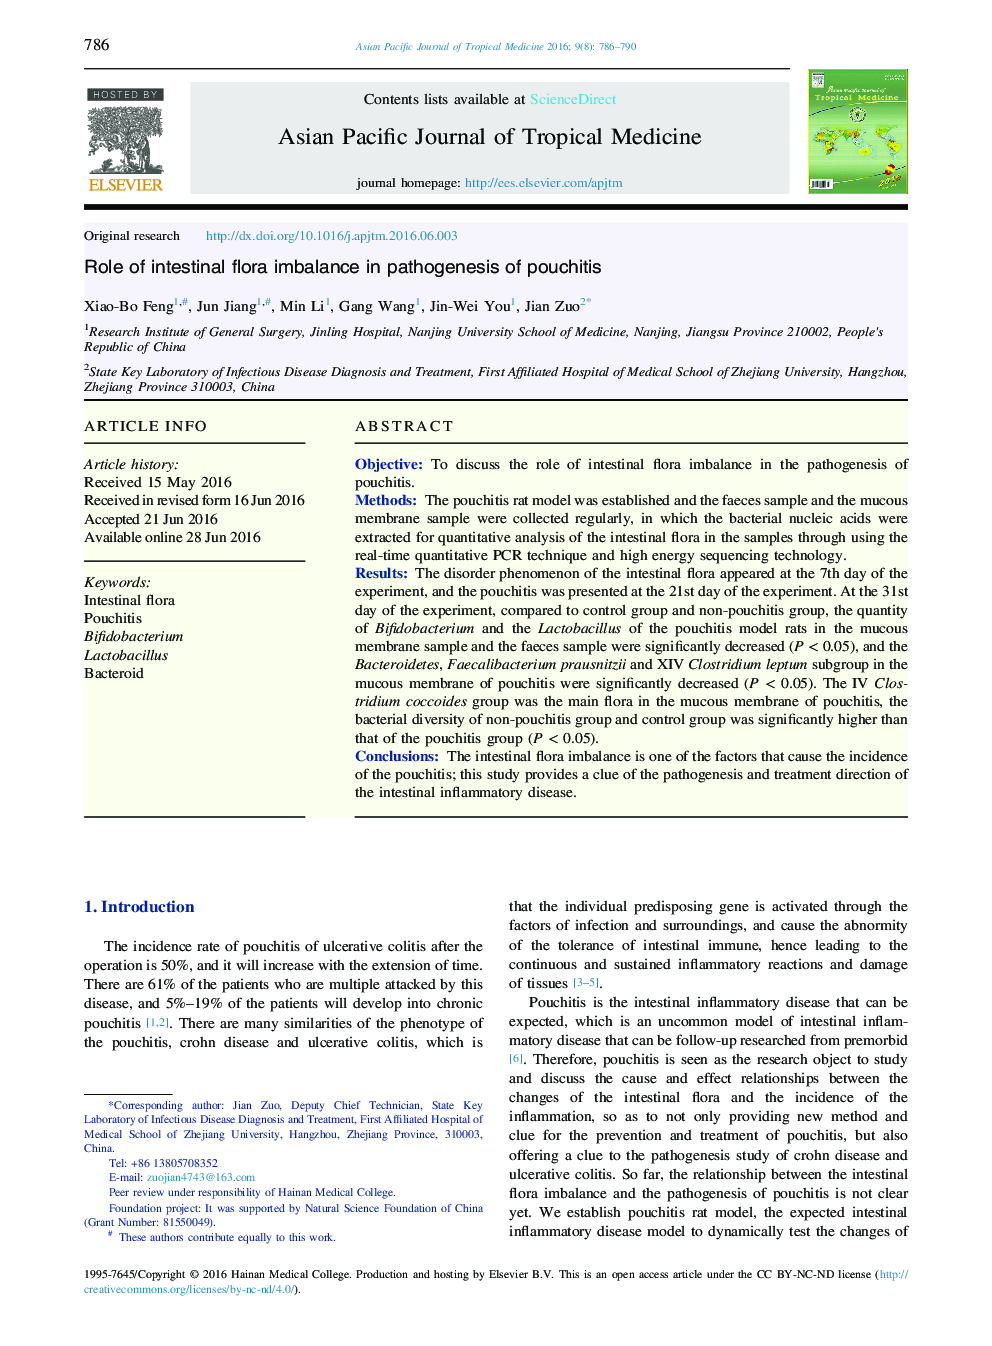 Role of intestinal flora imbalance in pathogenesis of pouchitis 